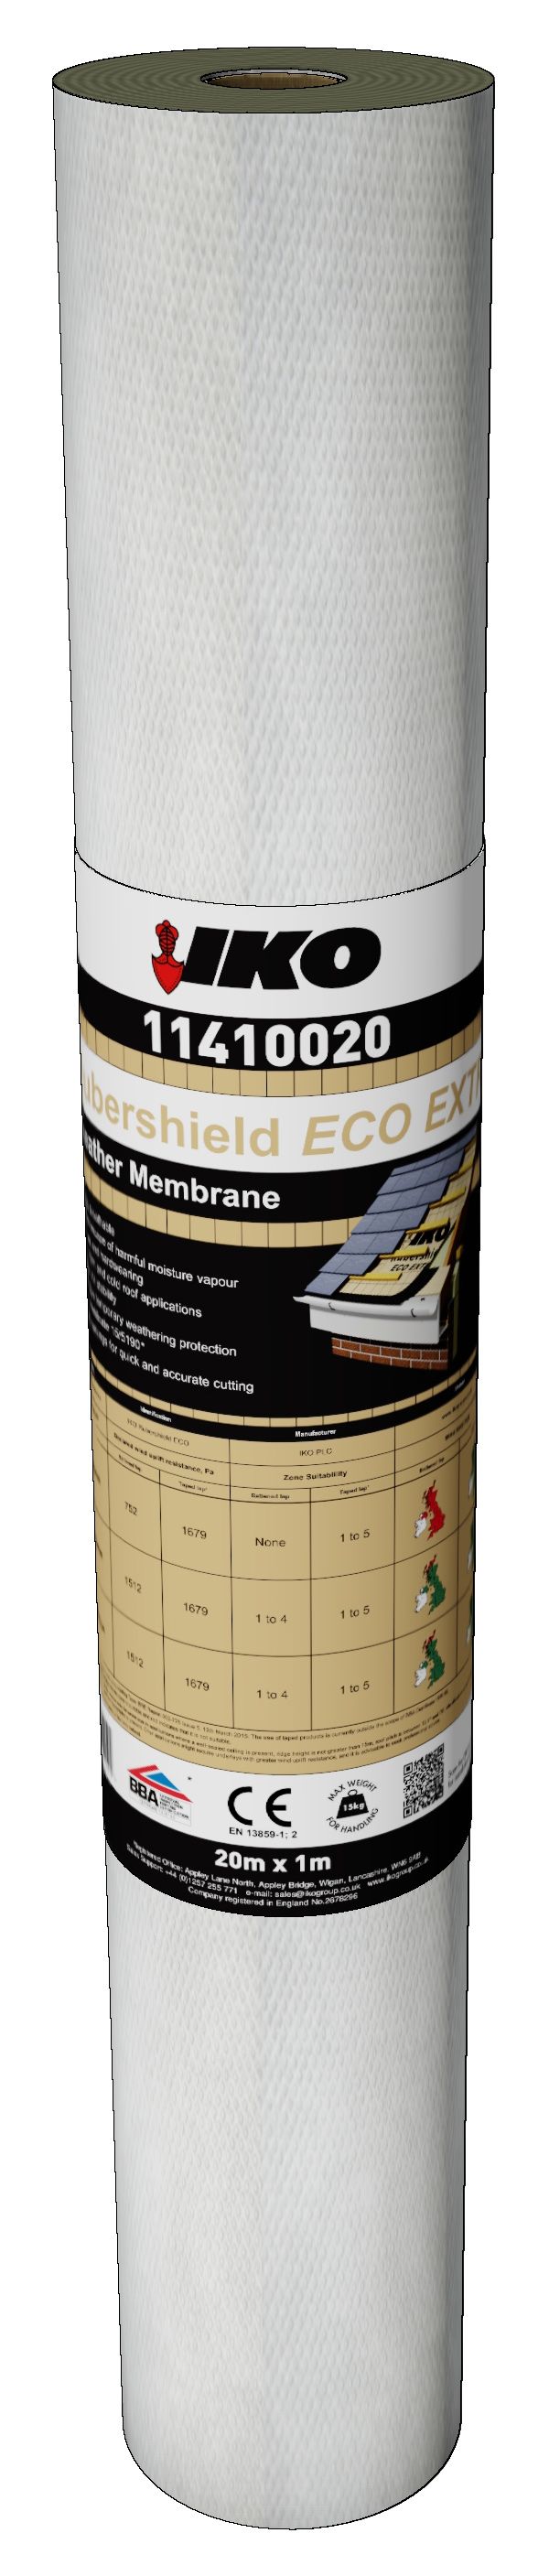 Image of IKO Rubershield Eco Extra 120g/sqm Roofing Membrane - 20 x 1m